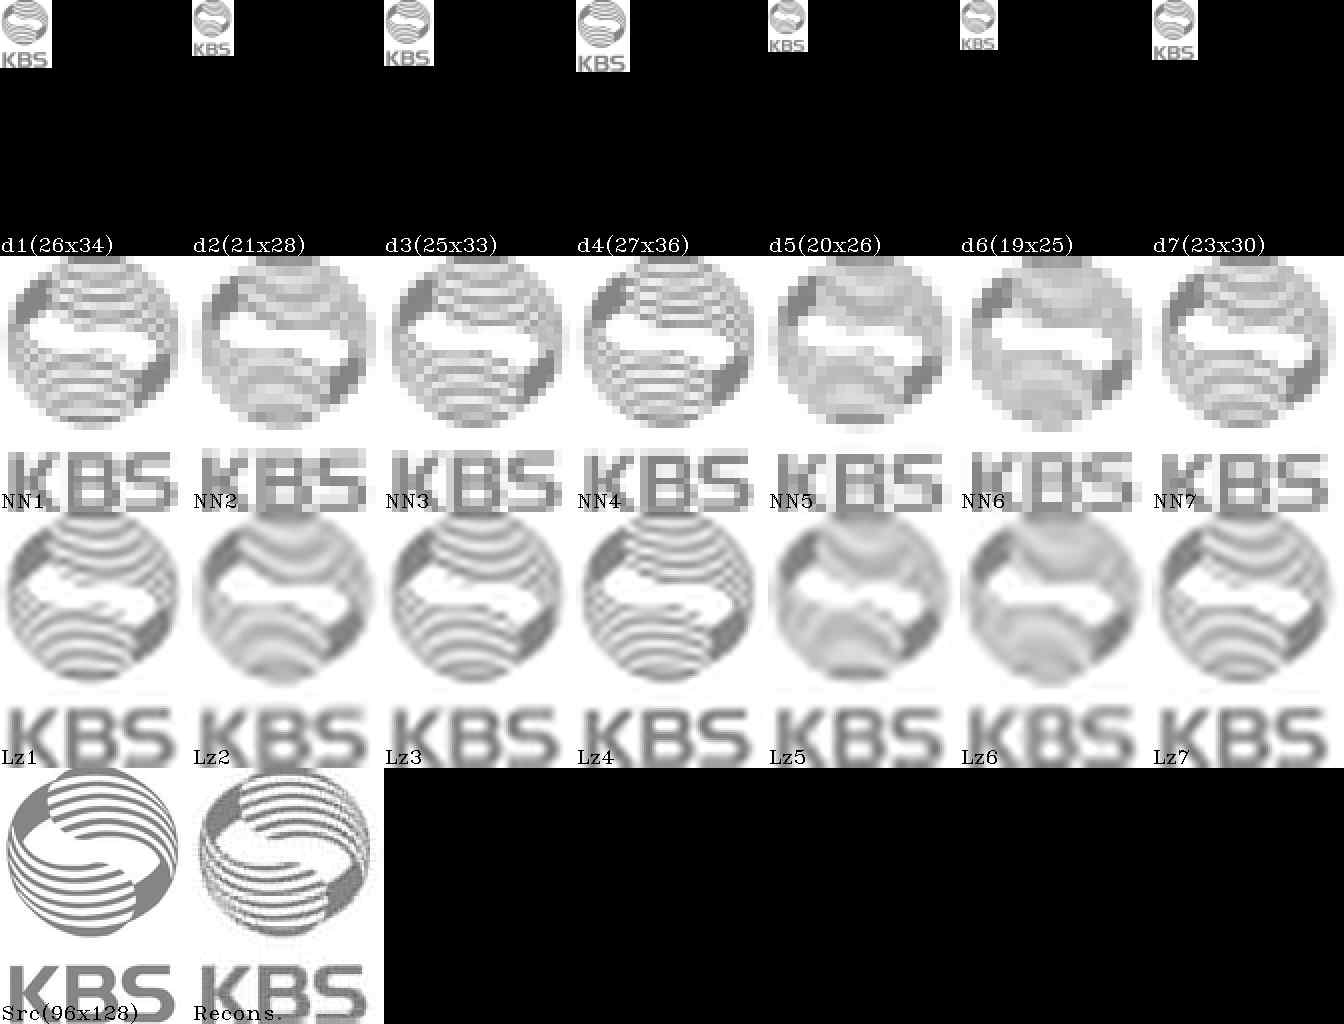 ‘KBS’ 영상의 분산전송(7개) 실험 결과